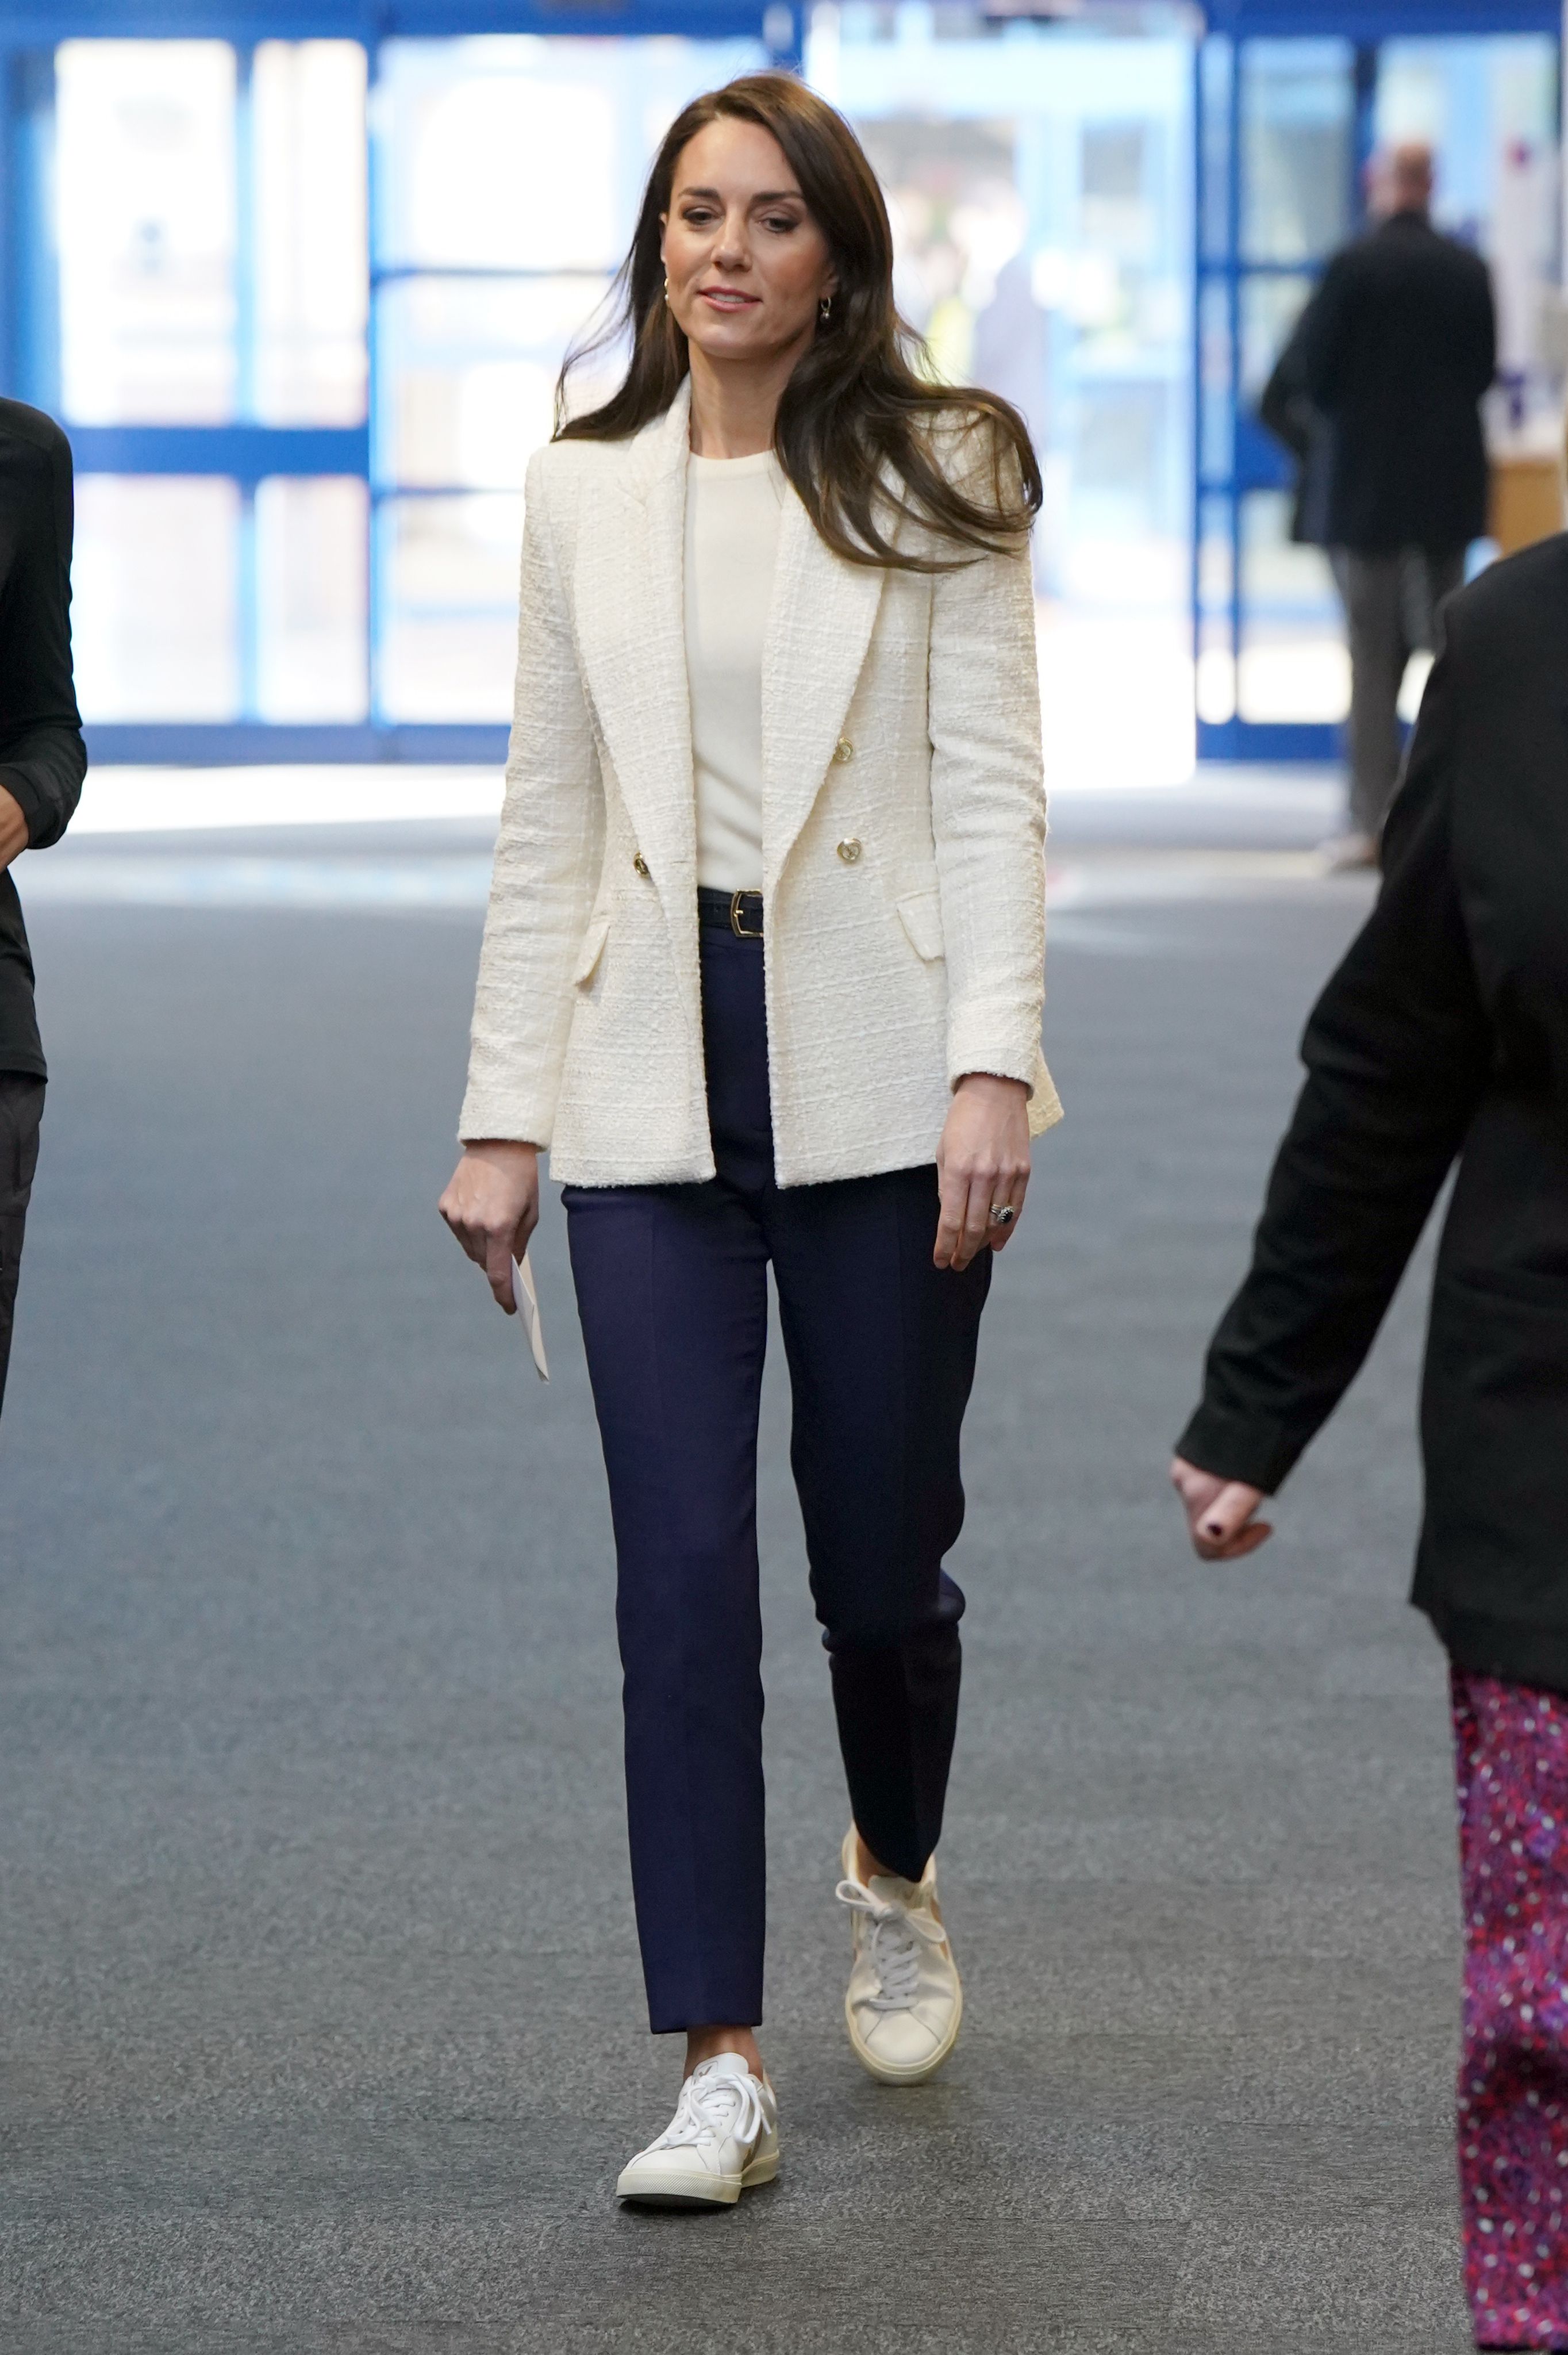 Kate Middleton's Zara Blazer, J Brand Jeans, Striped Shirt in New